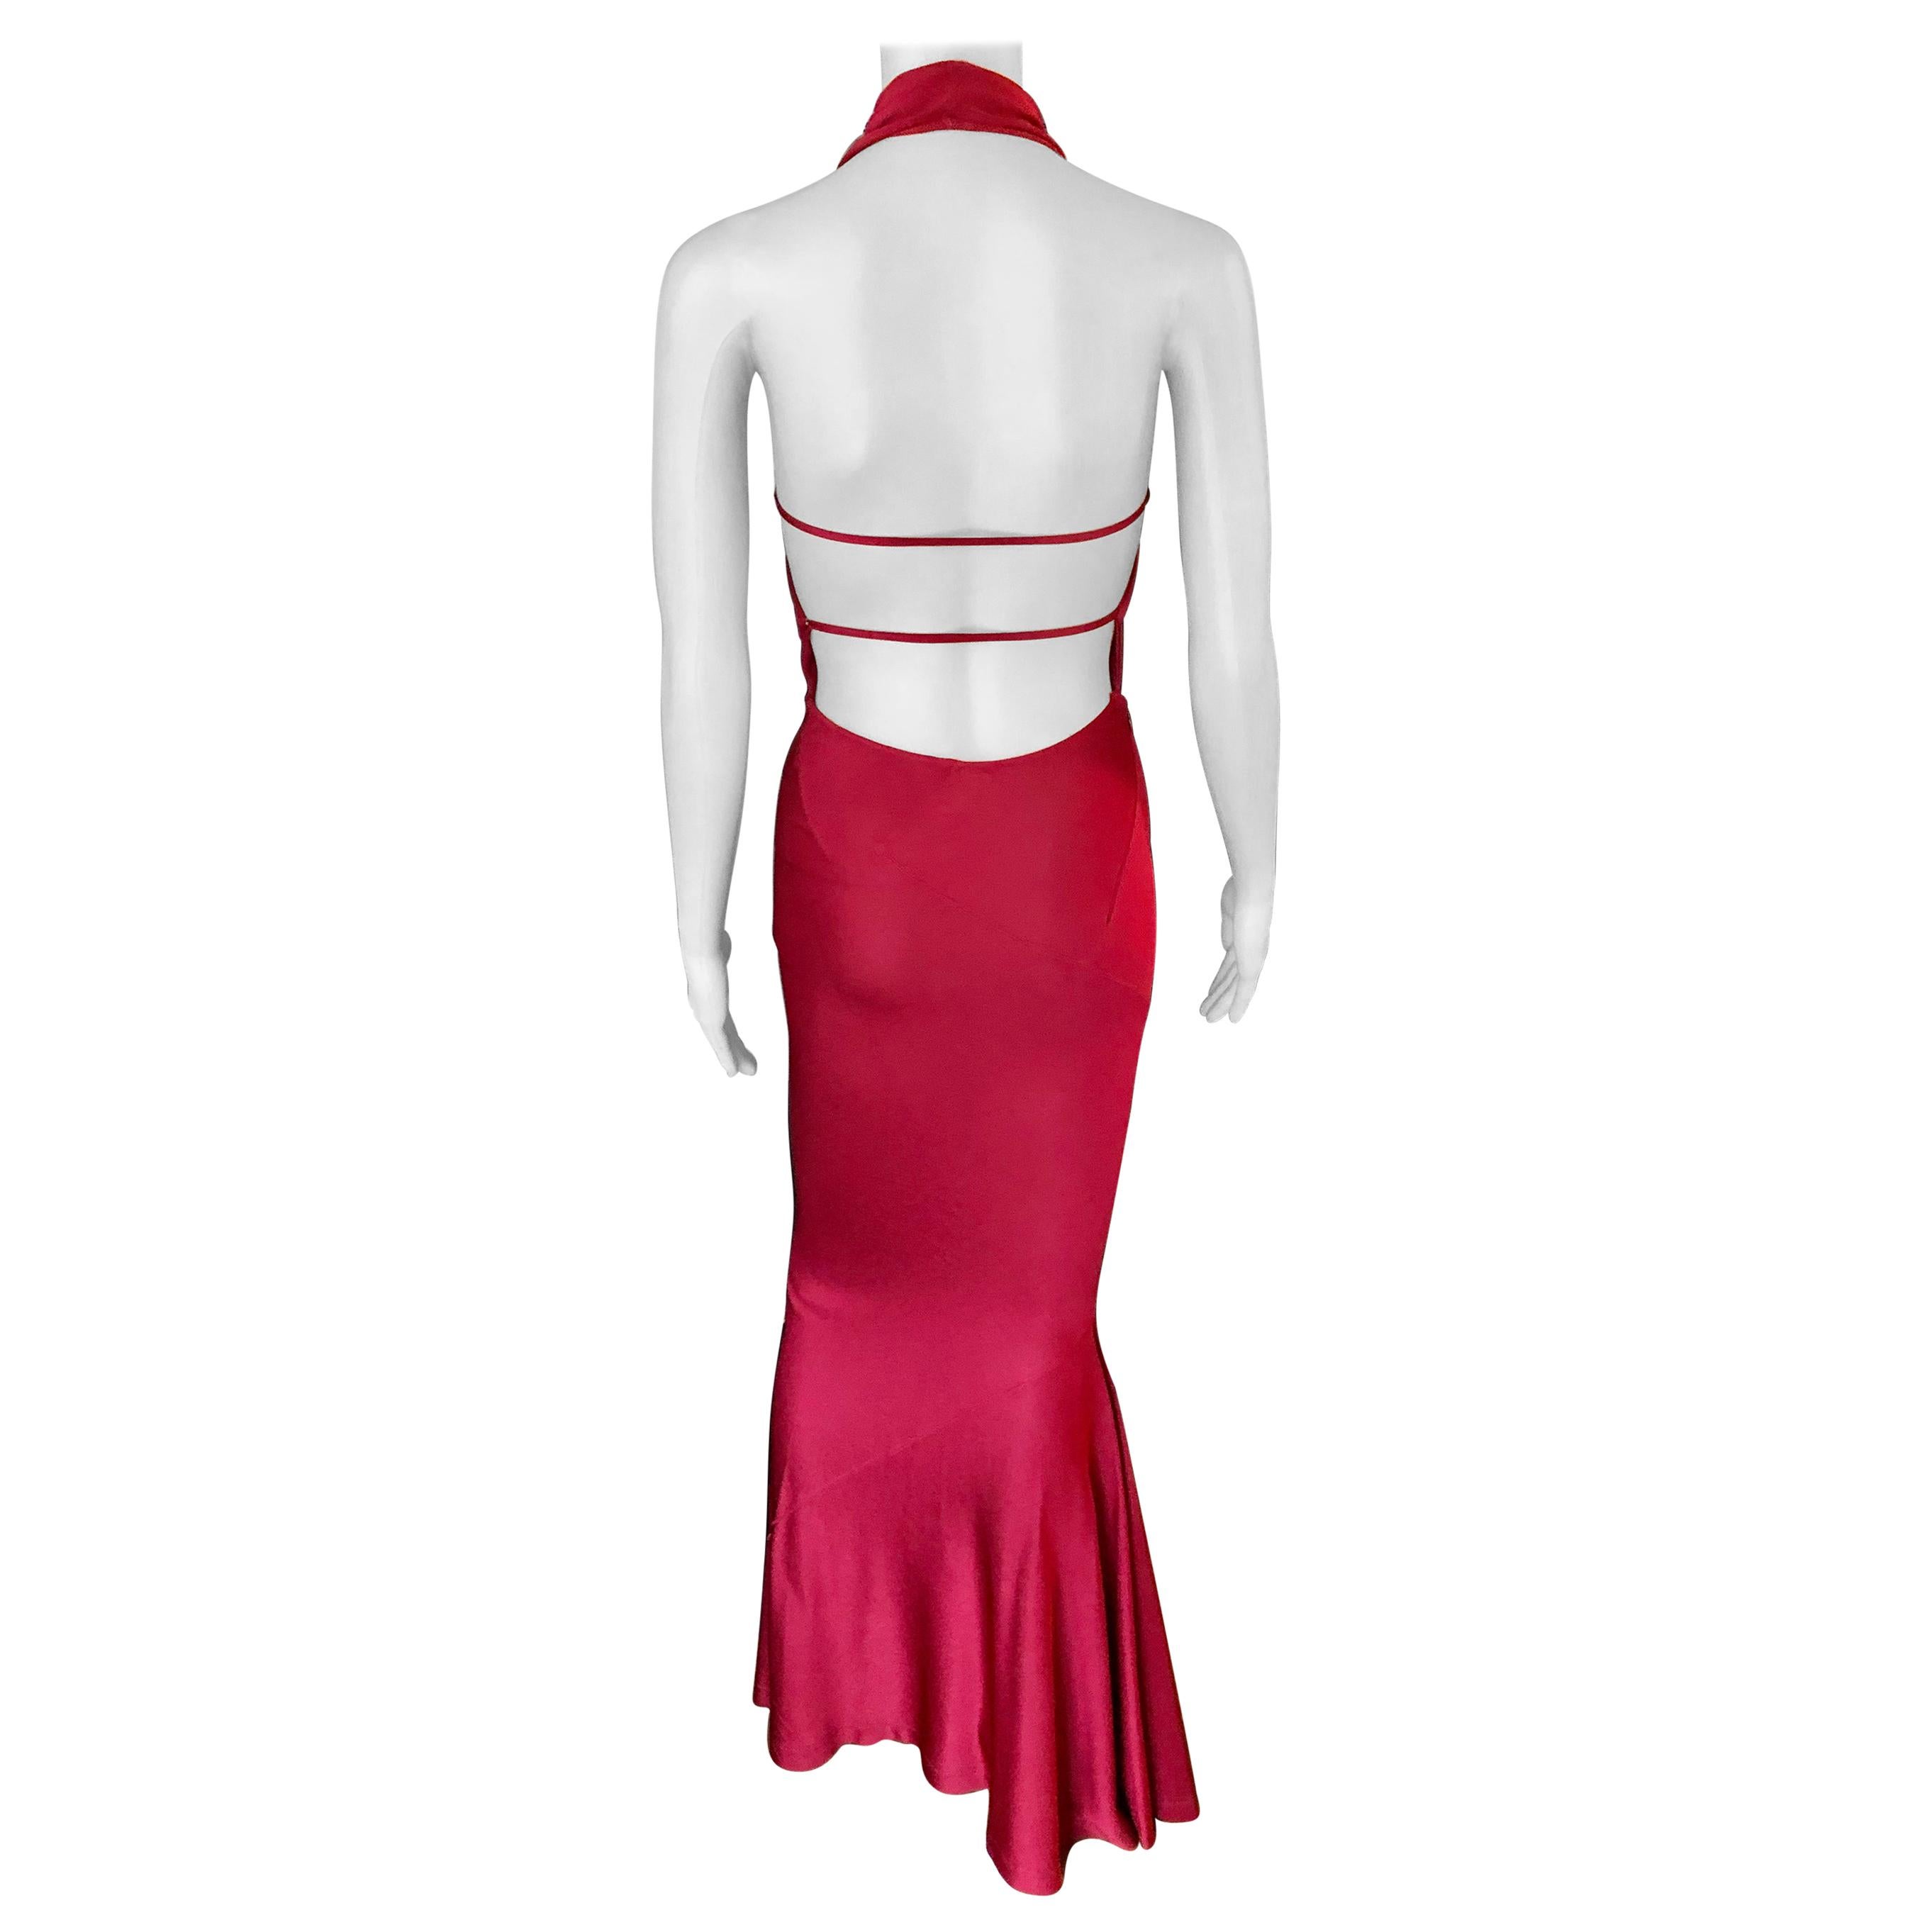 Azzedine Alaïa c. 1990's Vintage Halter Backless Red Gown Maxi Dress